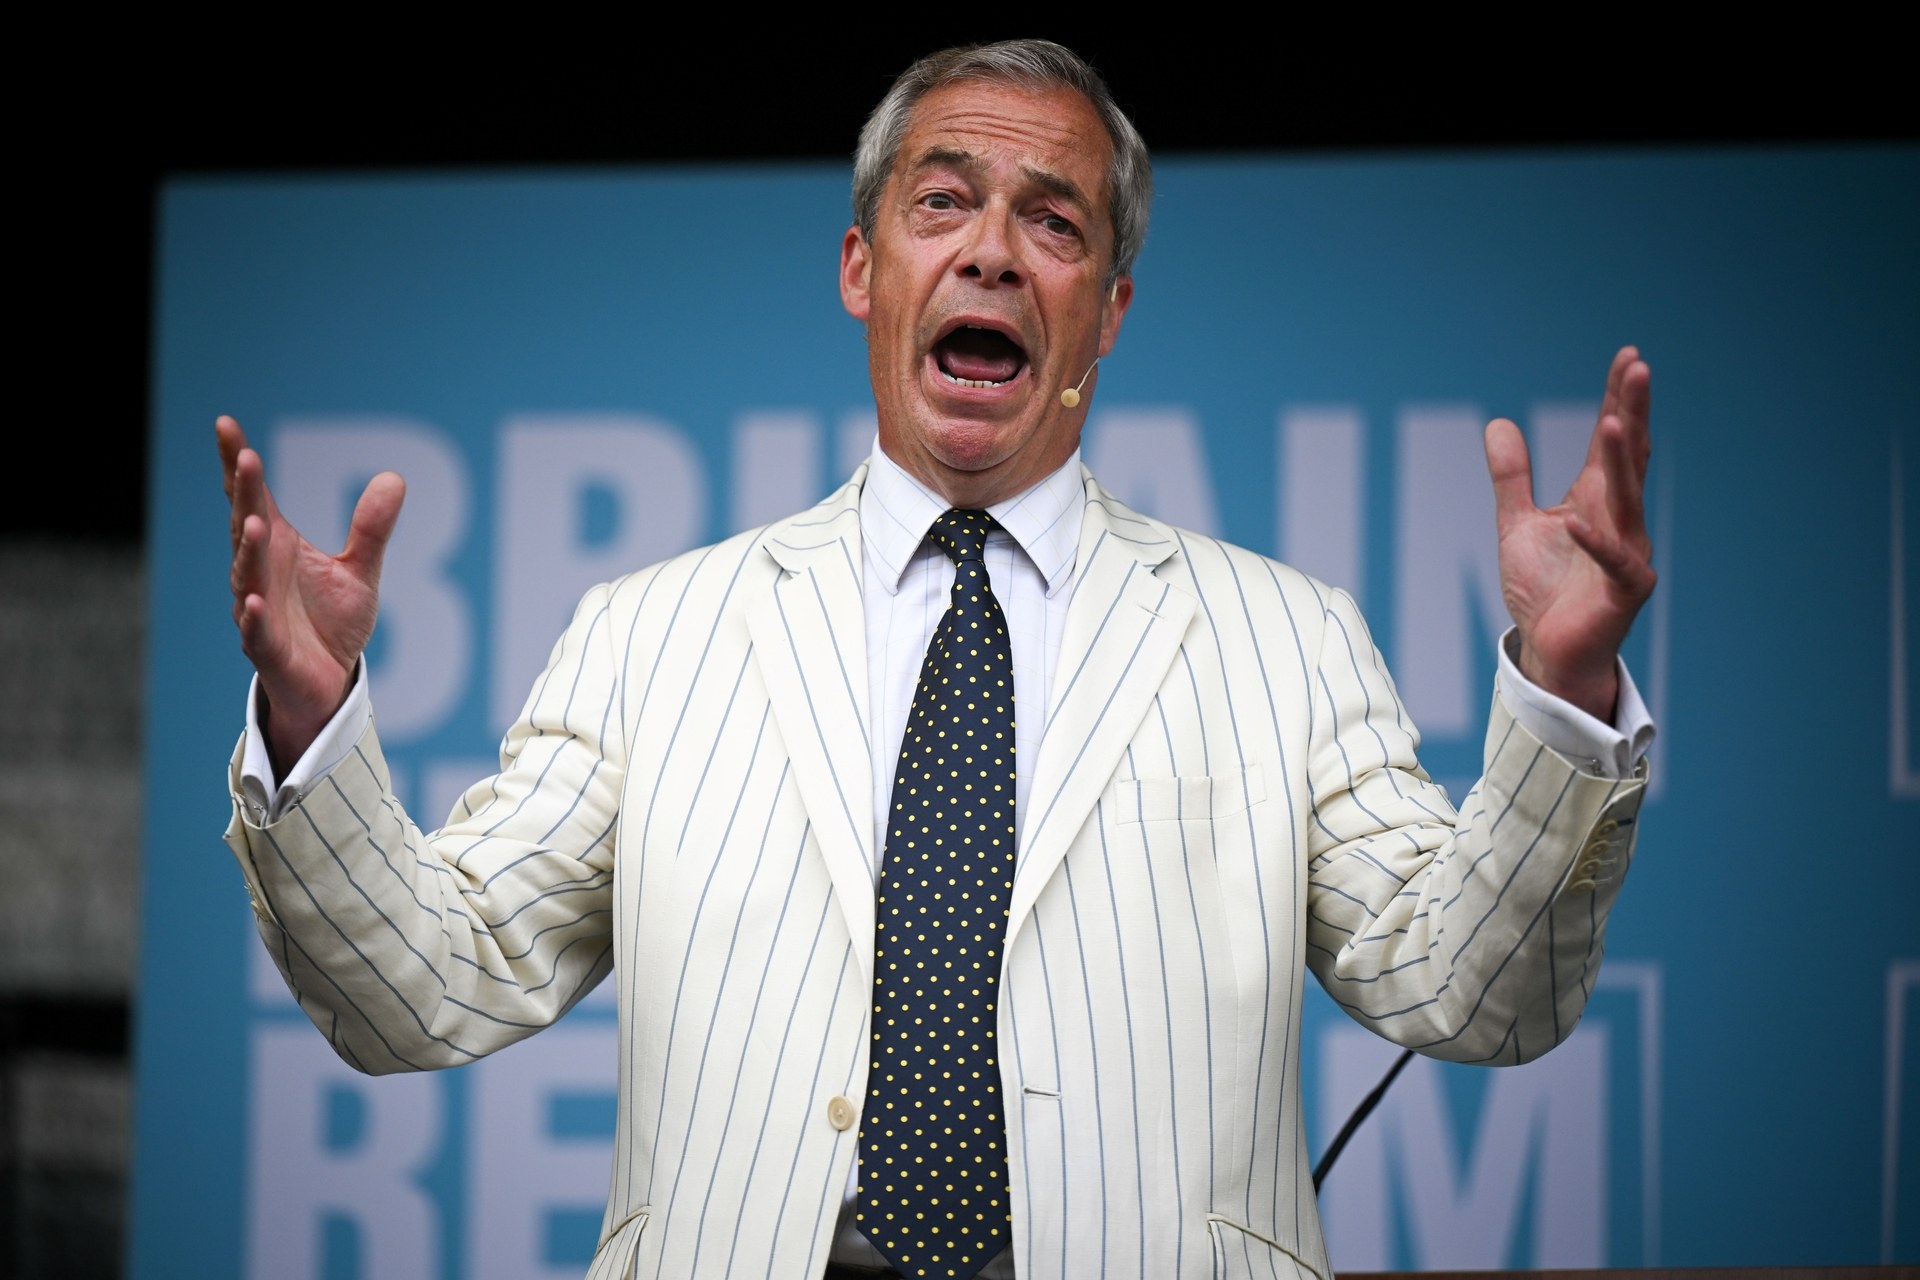 Reform UK leader Nigel Farage is focusing his campaign on immigration.